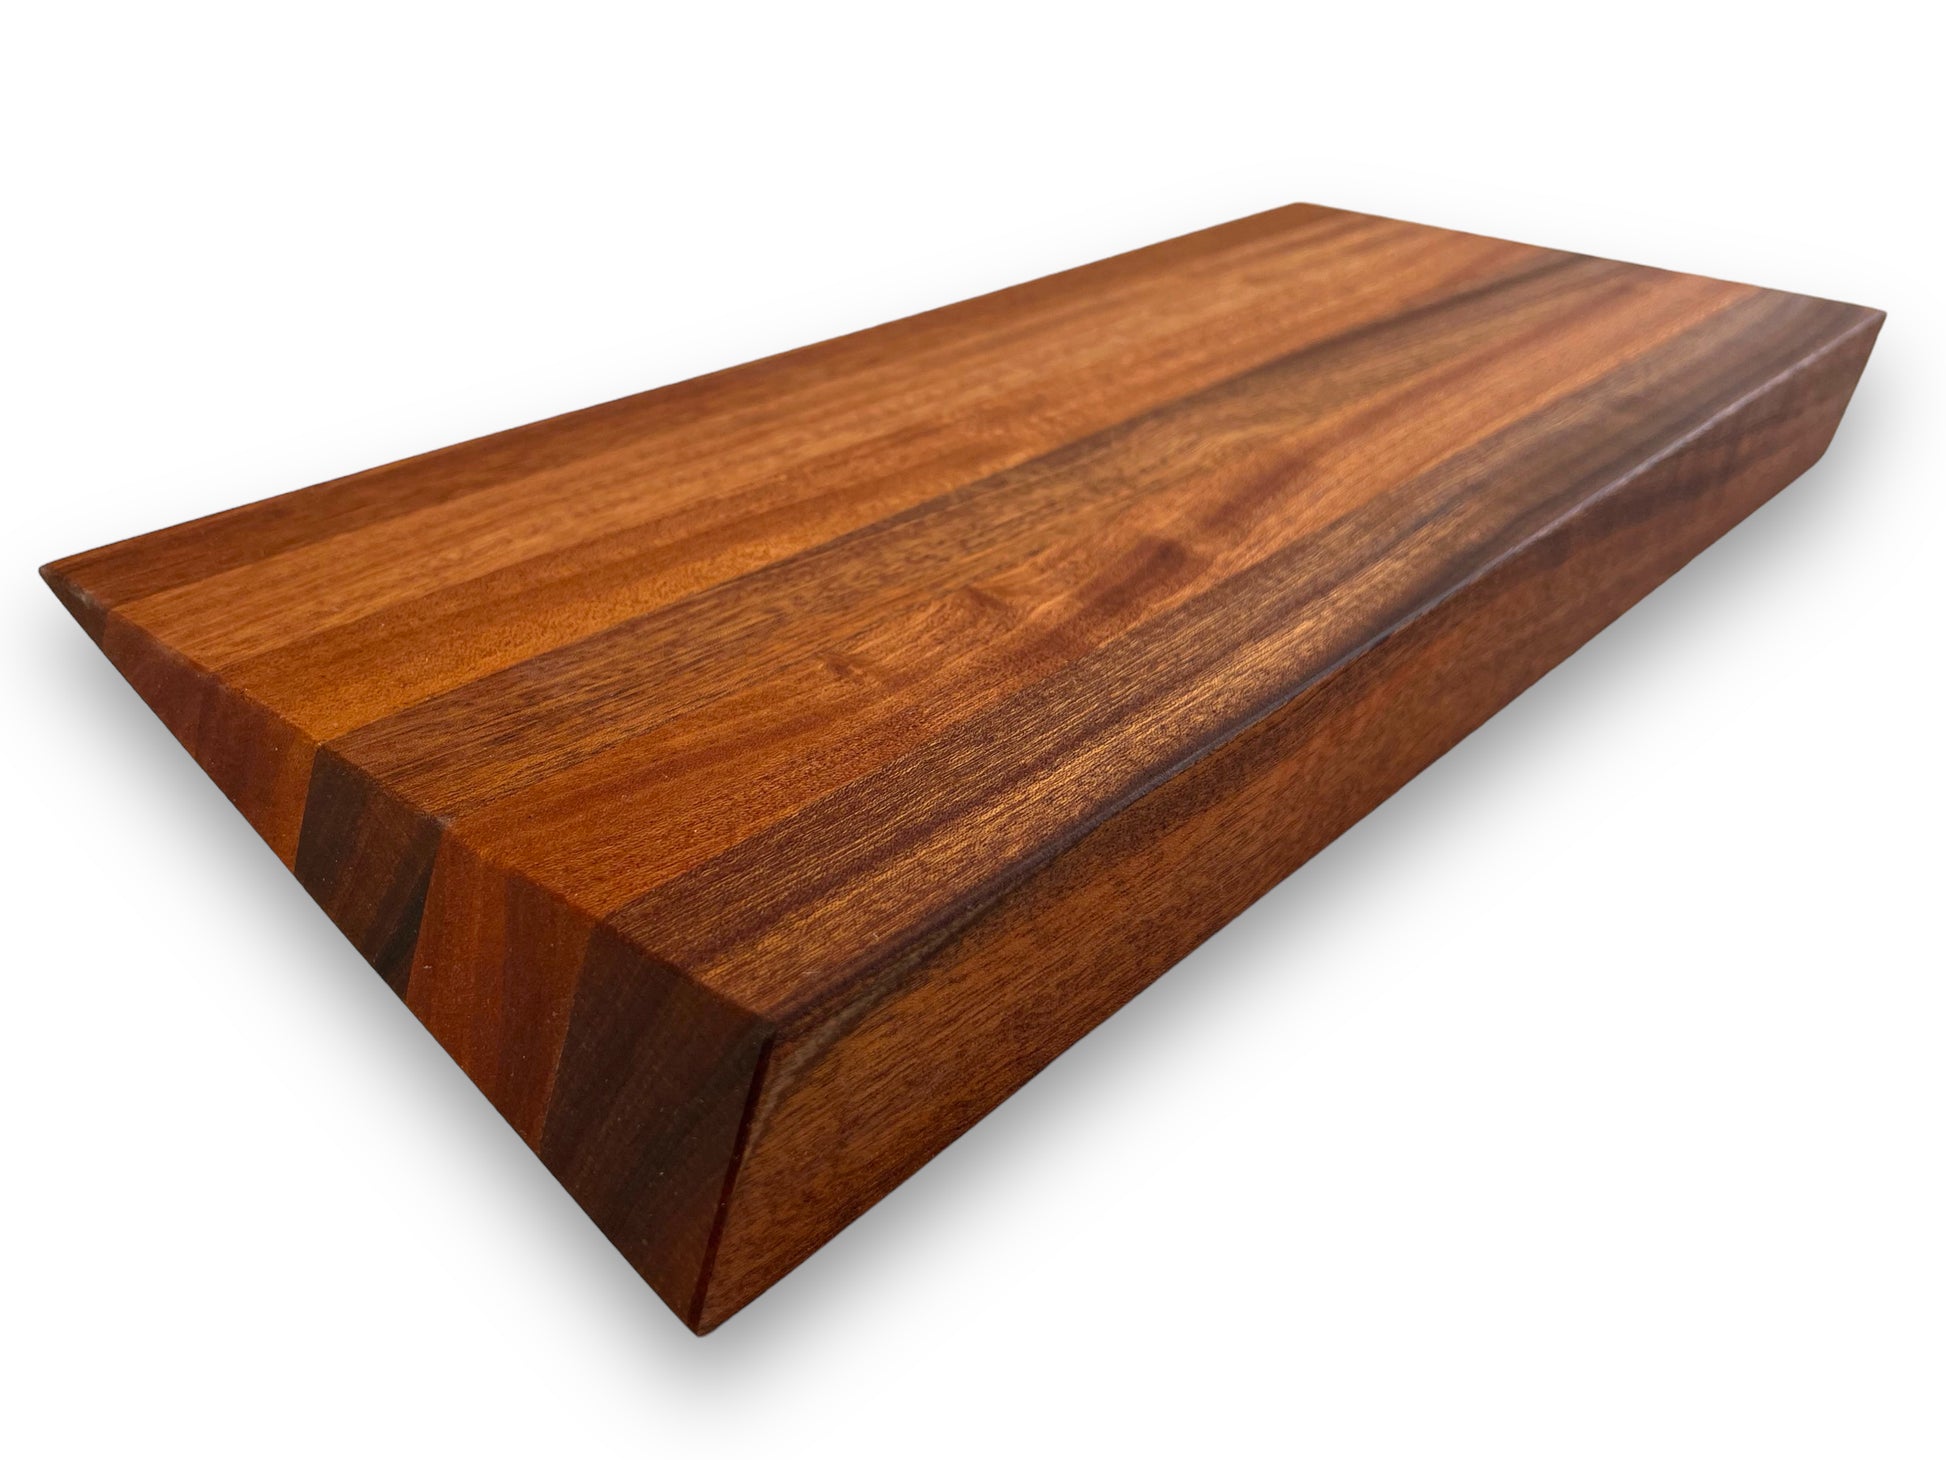 2" Sapele Mahogany Z-shaped cutting board